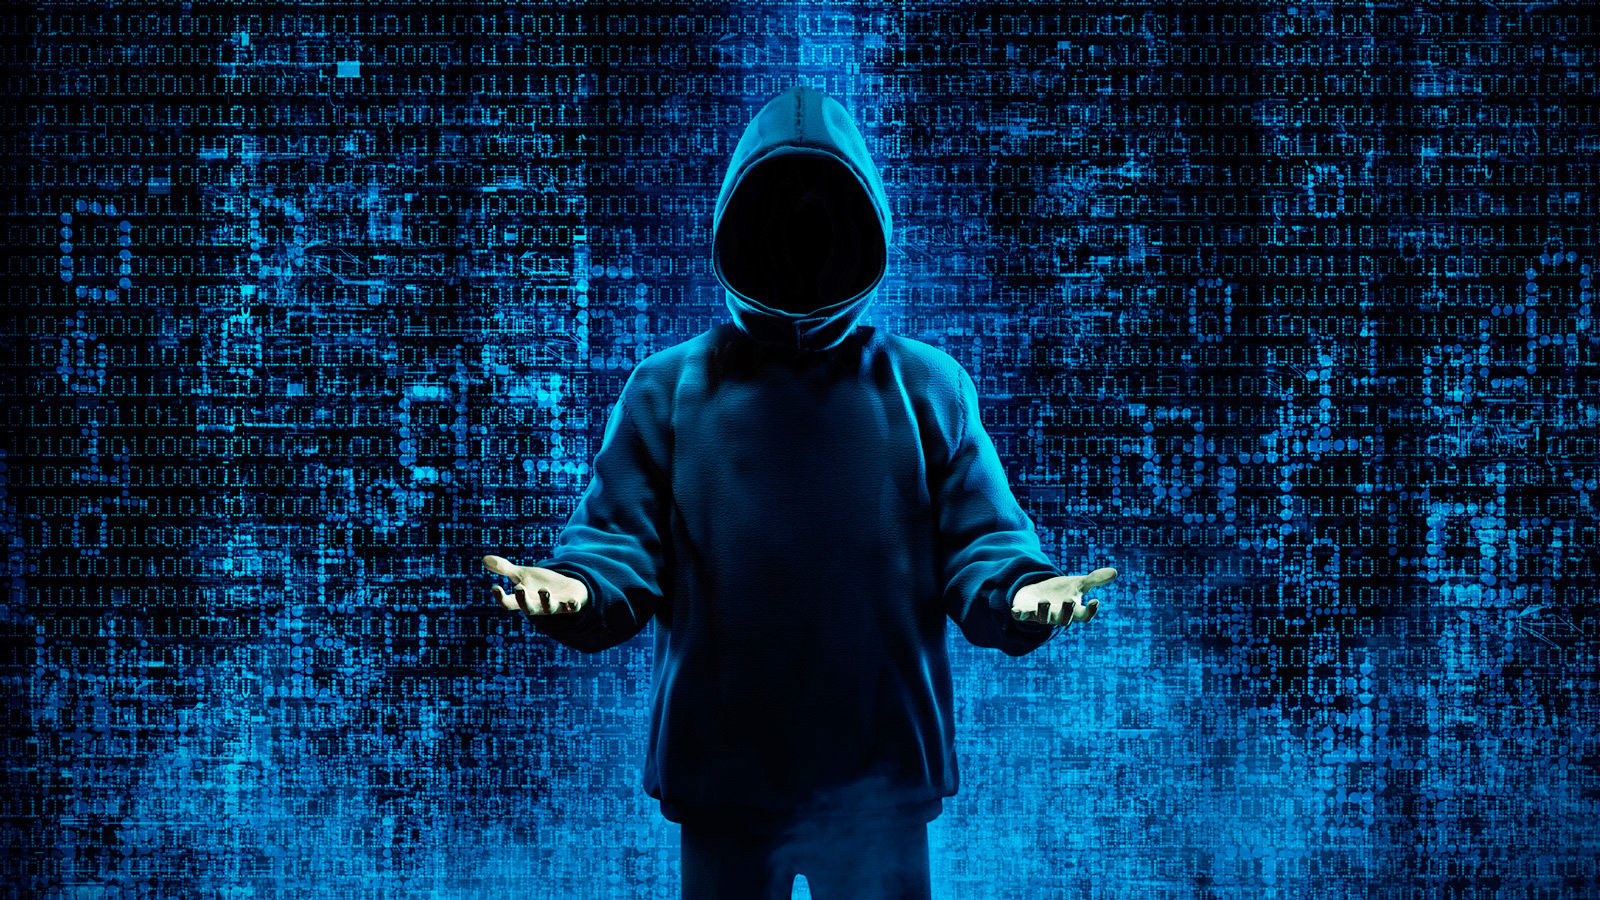 Spain warns of LockBit Locker ransomware phishing attacks – Source: www.bleepingcomputer.com